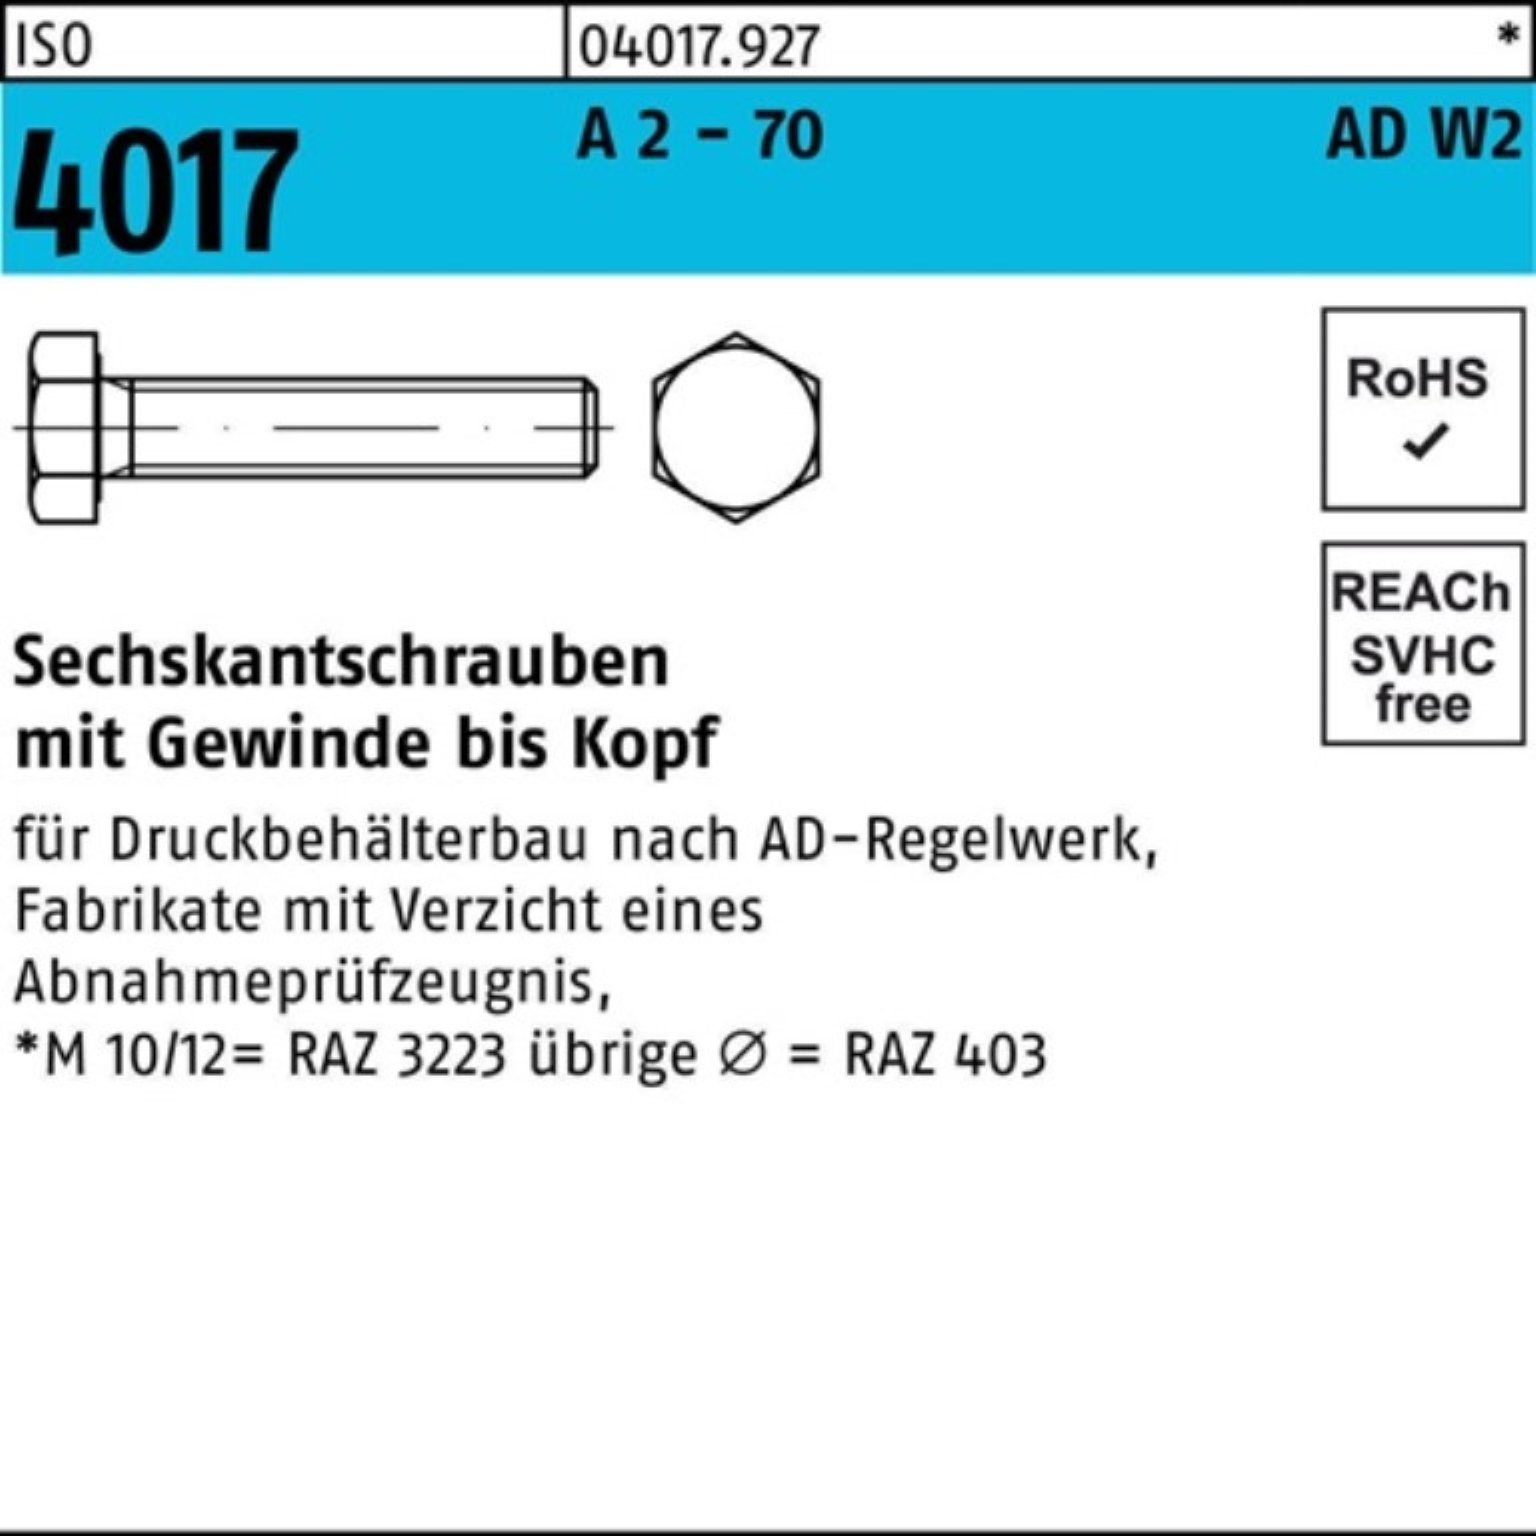 Bufab Sechskantschraube 100er ISO Pack 4017 St A VG M16x - 2 70 50 Sechskantschraube AD-W2 25